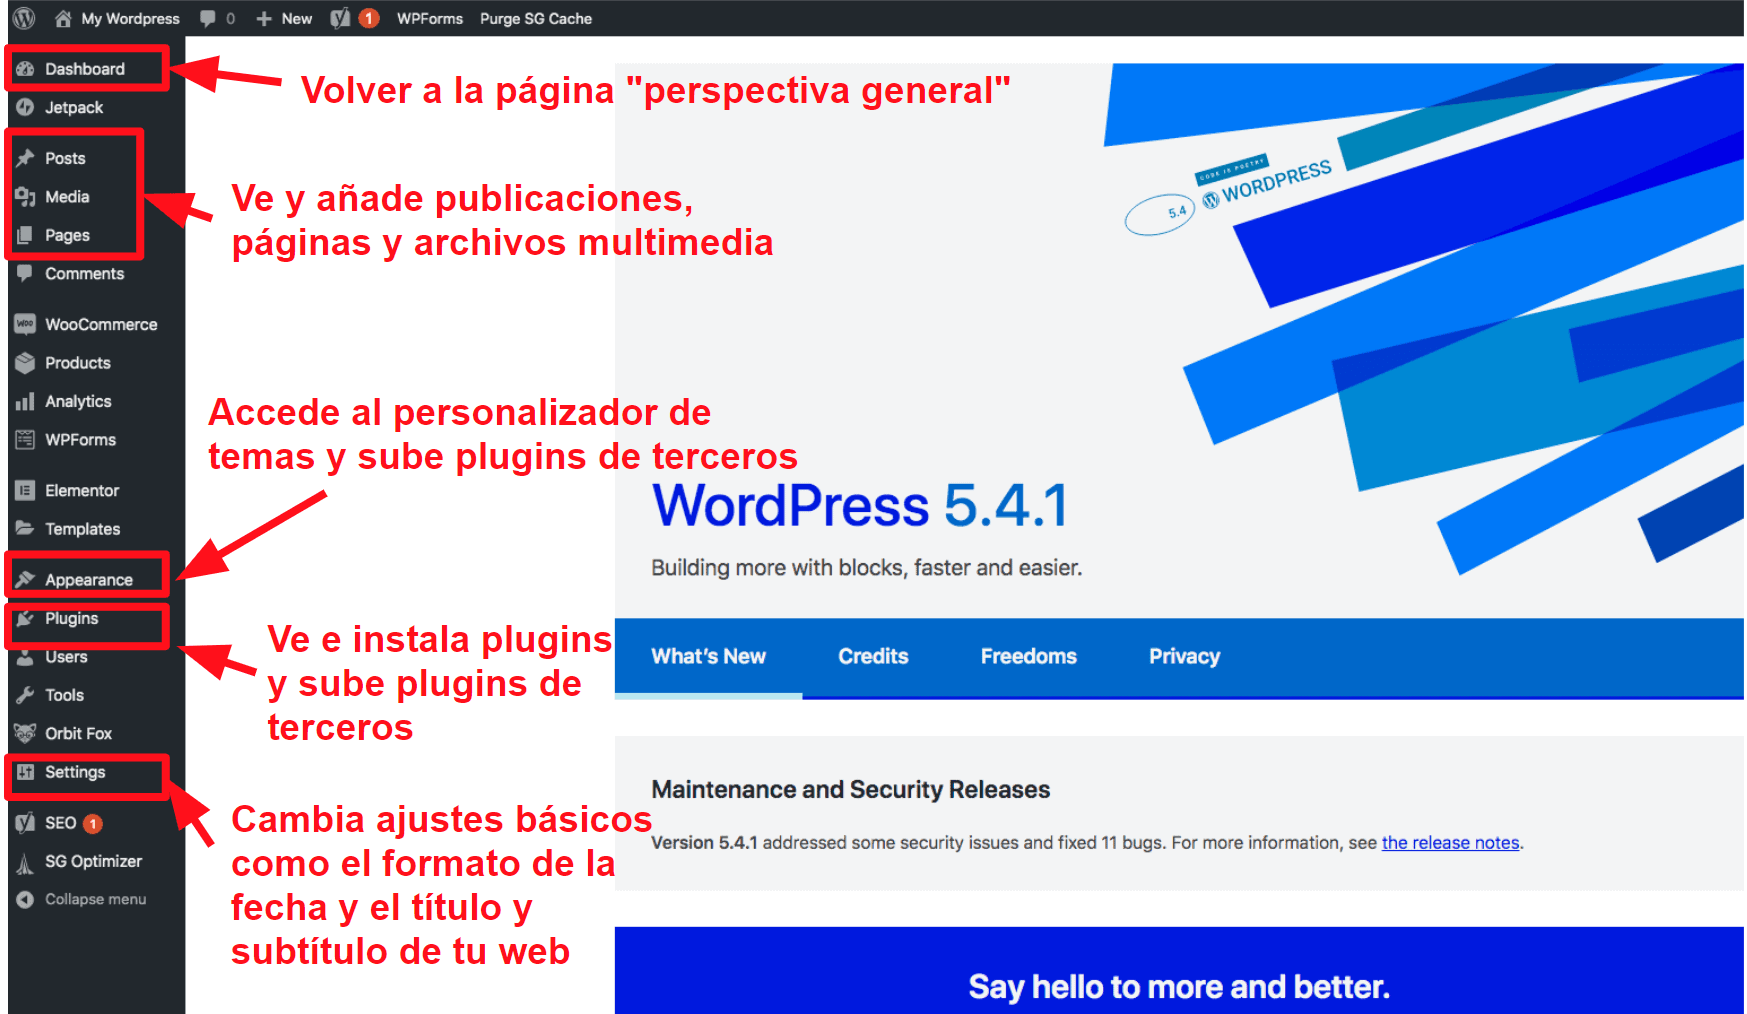 The WordPress dashboard ES16